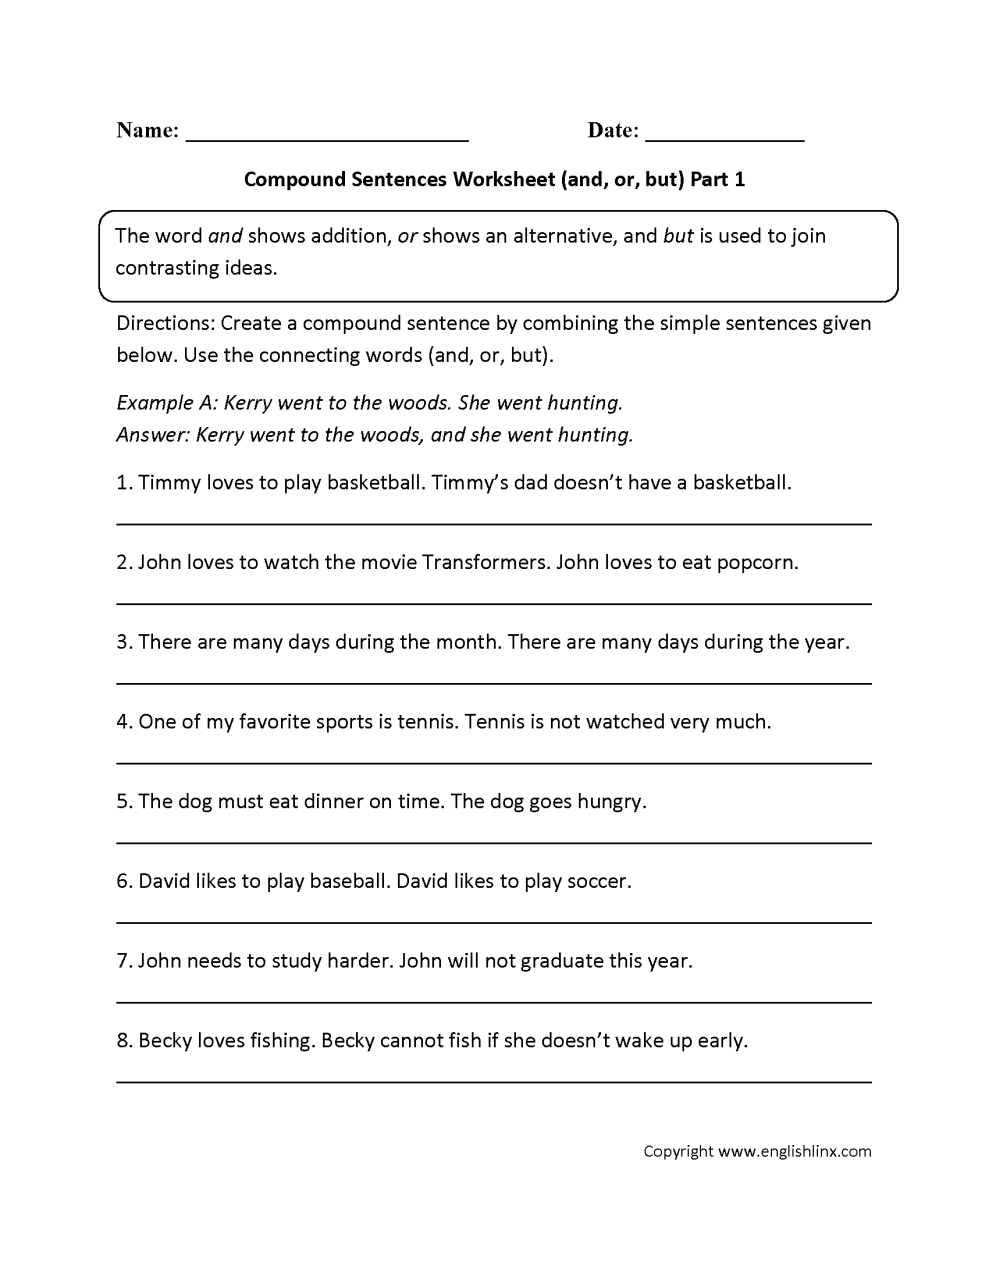 2nd Grade Telling Time Worksheets